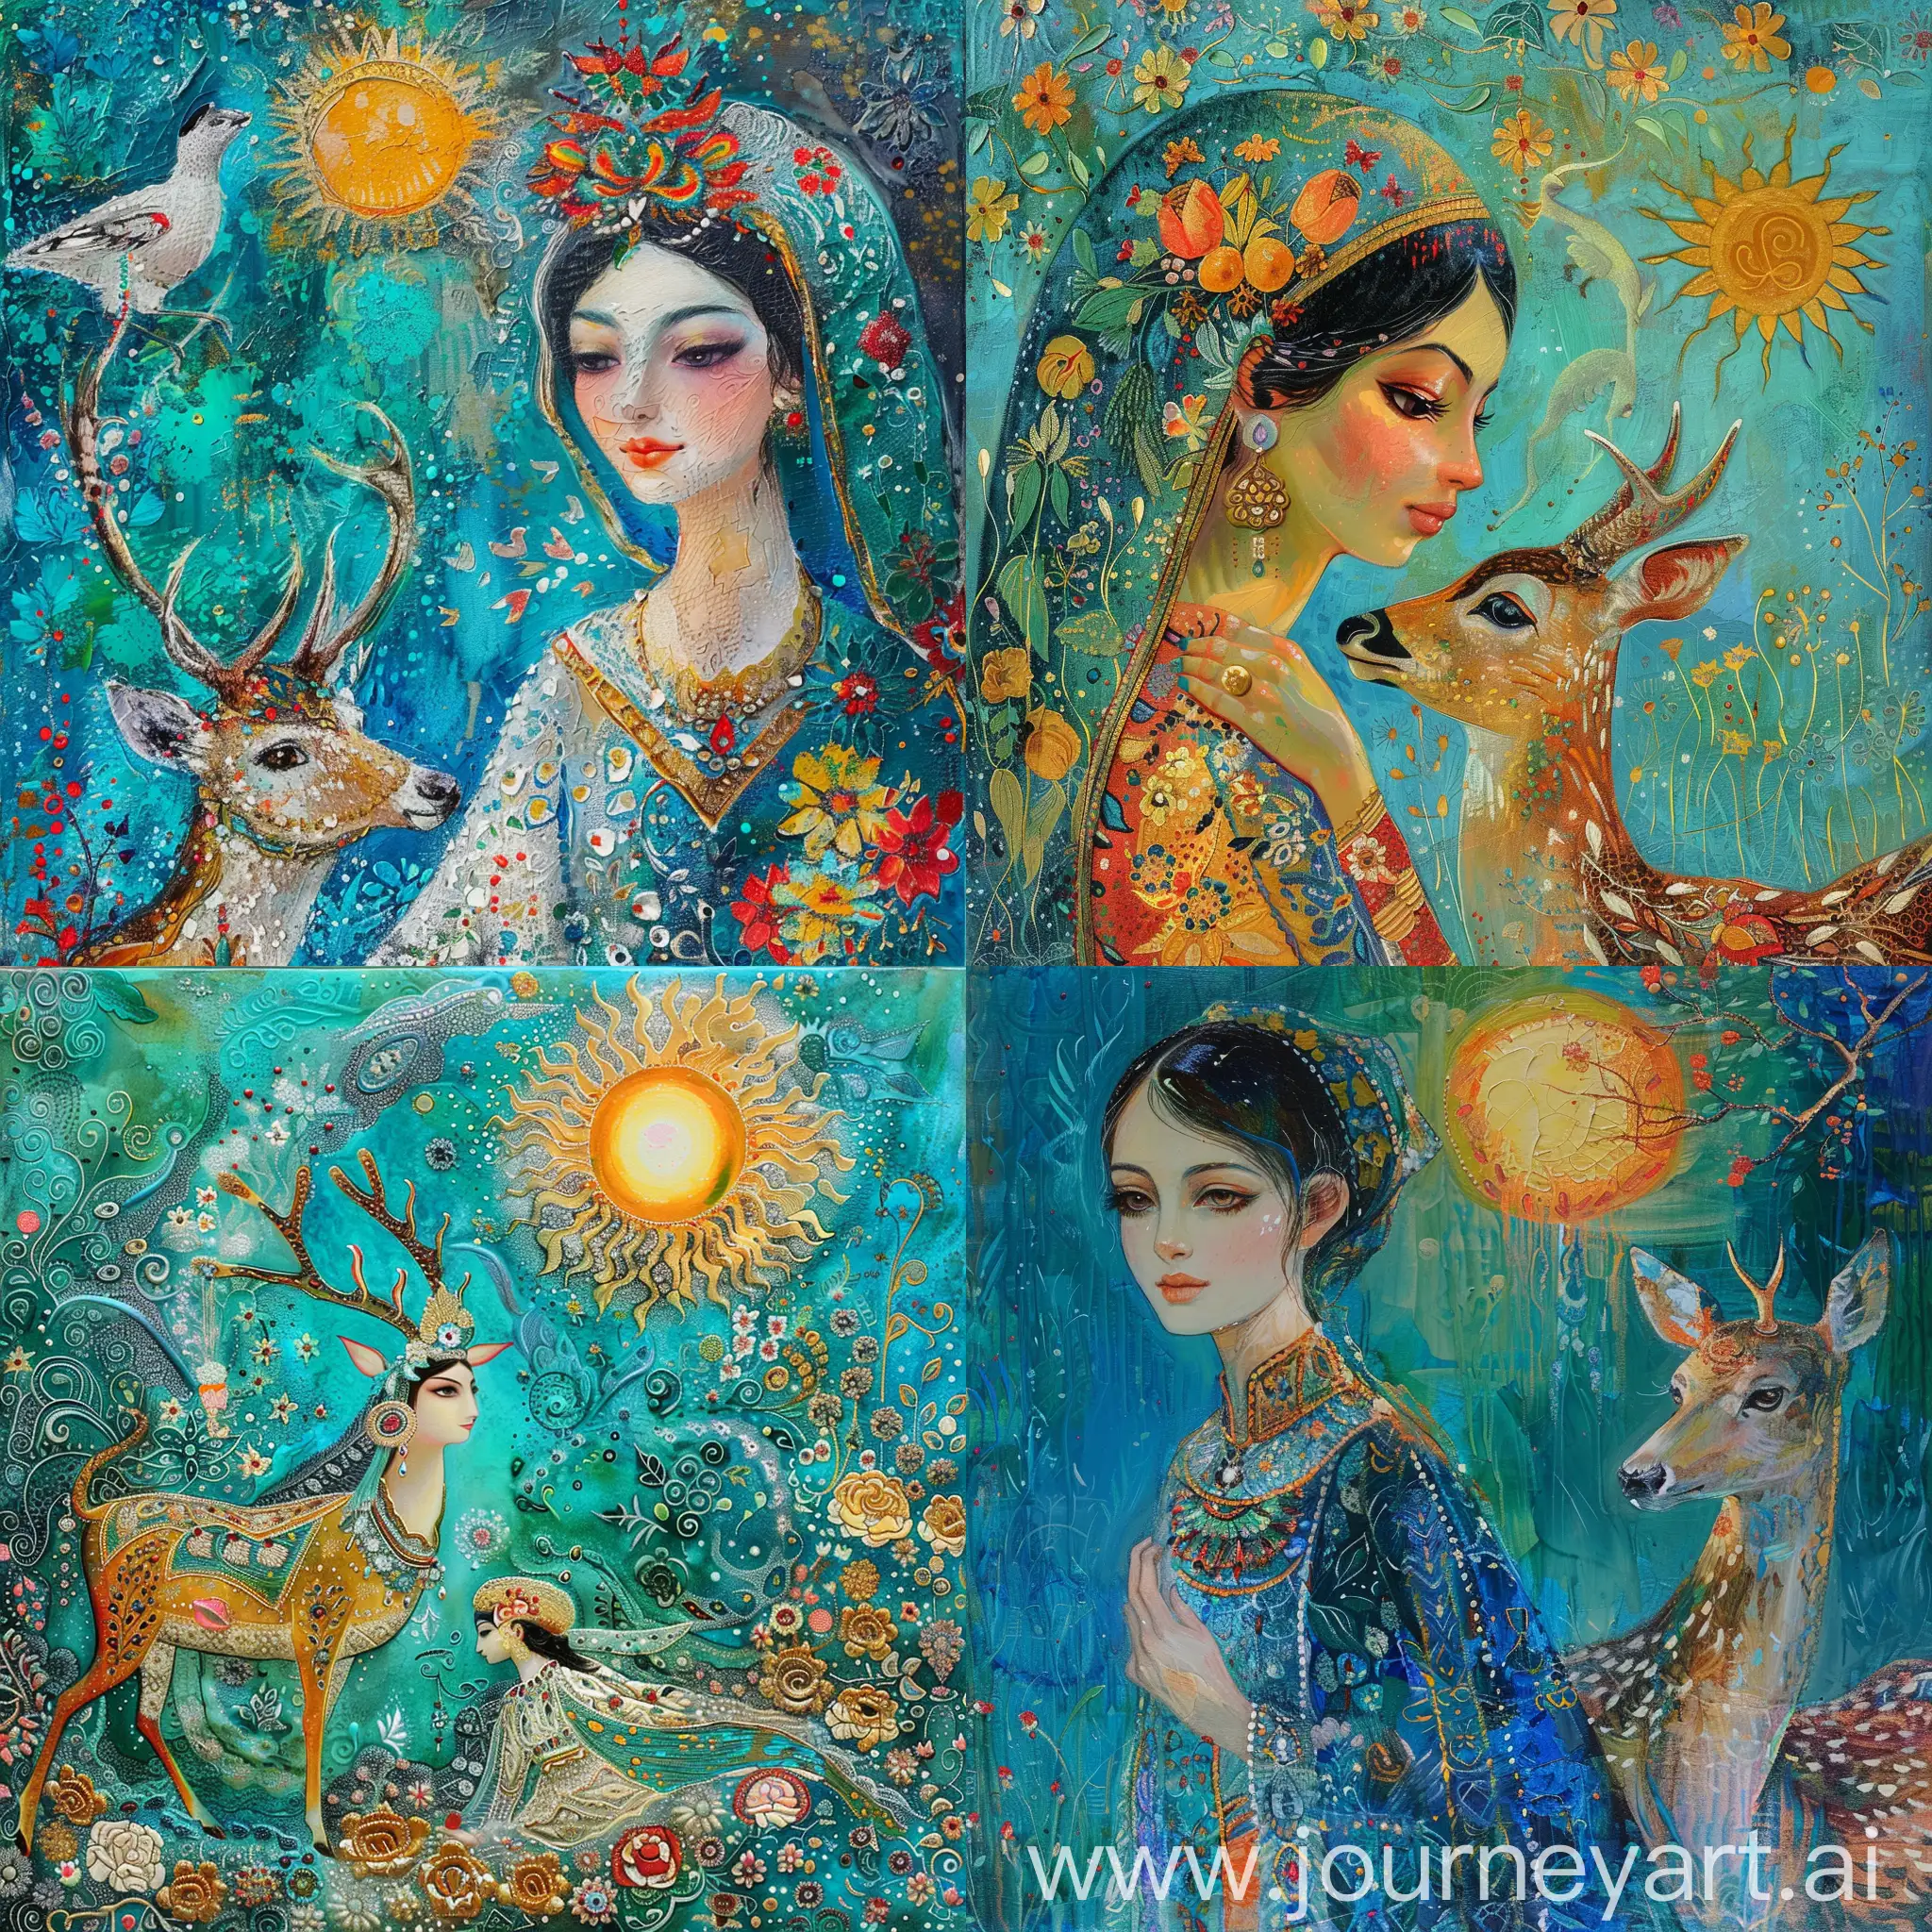 iranian traditional painting
a deer
a beautiful girl
sun
torquise blue